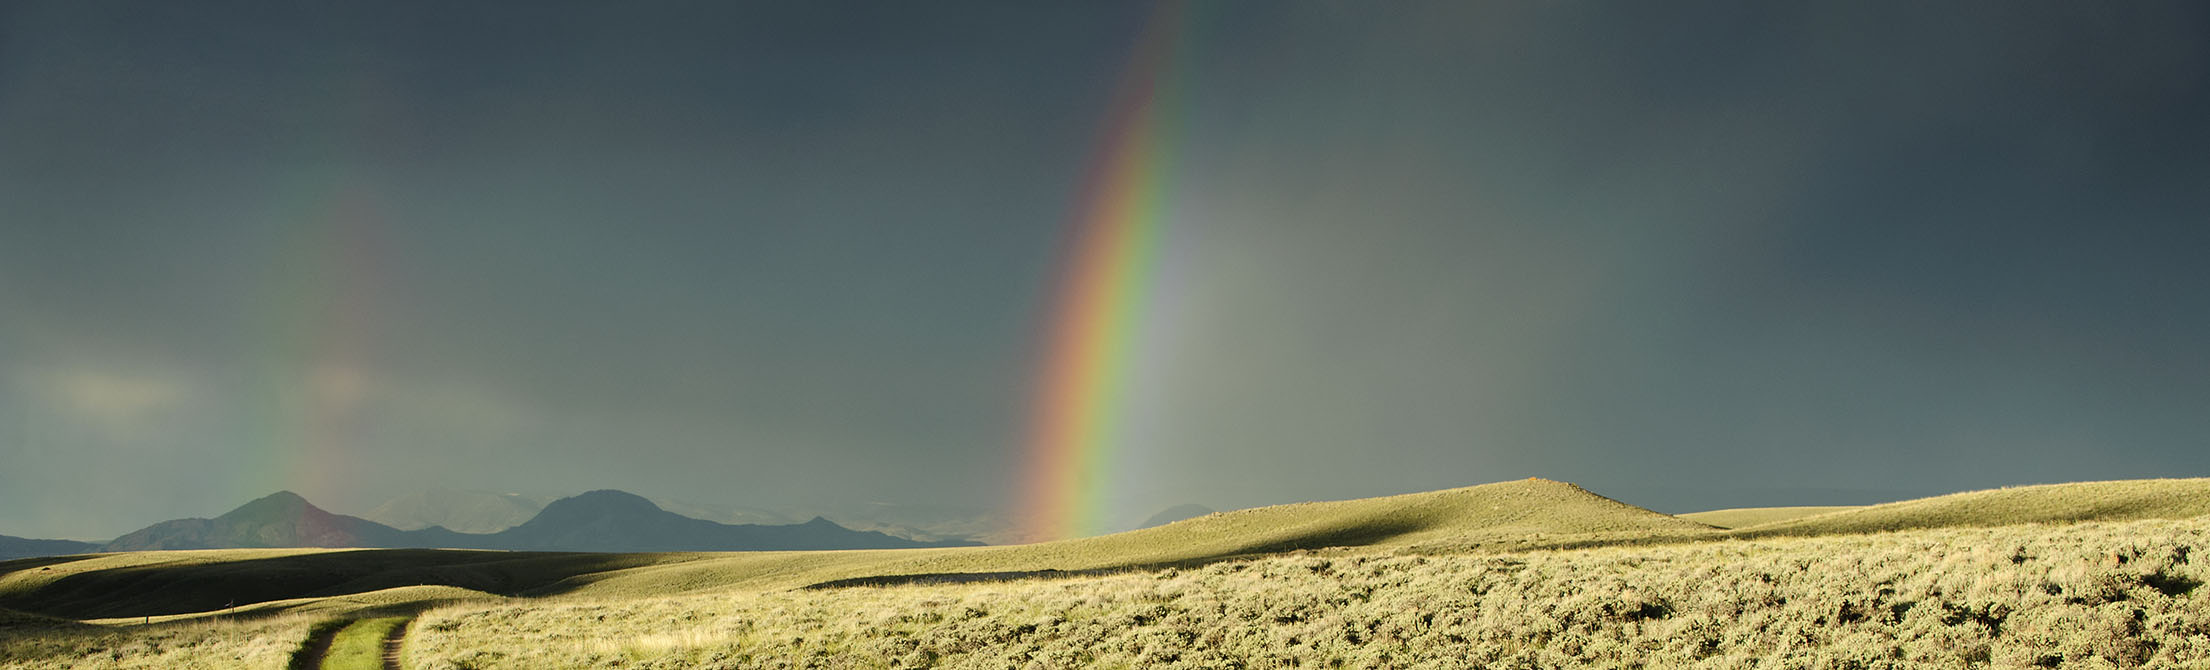 Double Rainbow over Green Field